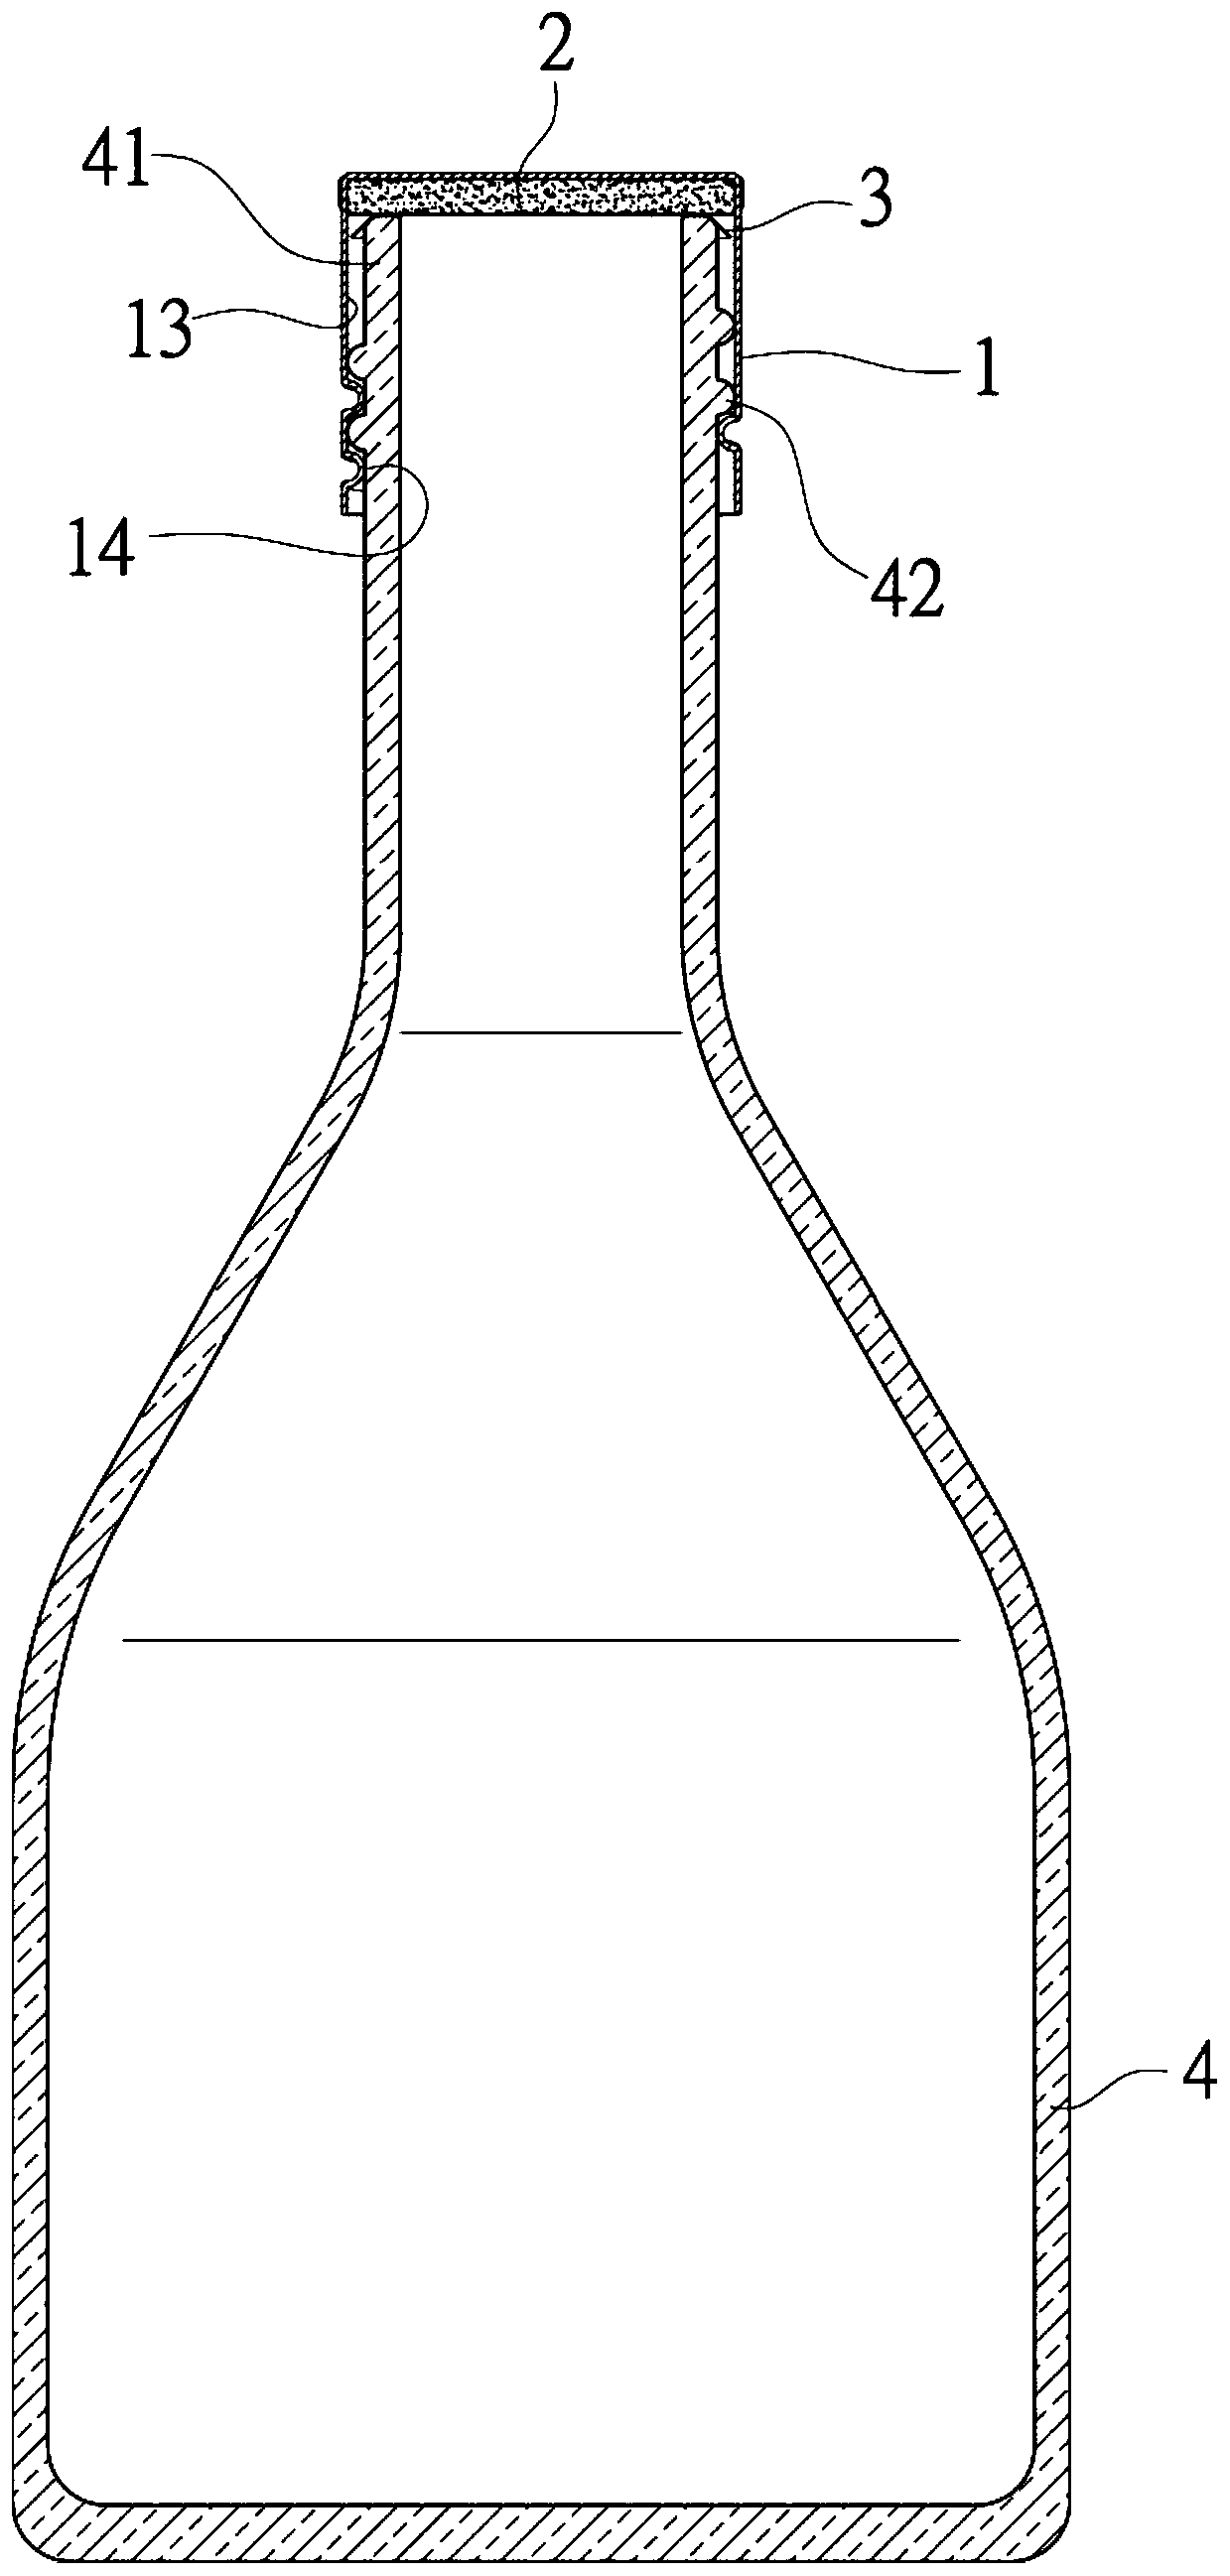 Cap structure for fragile bottle